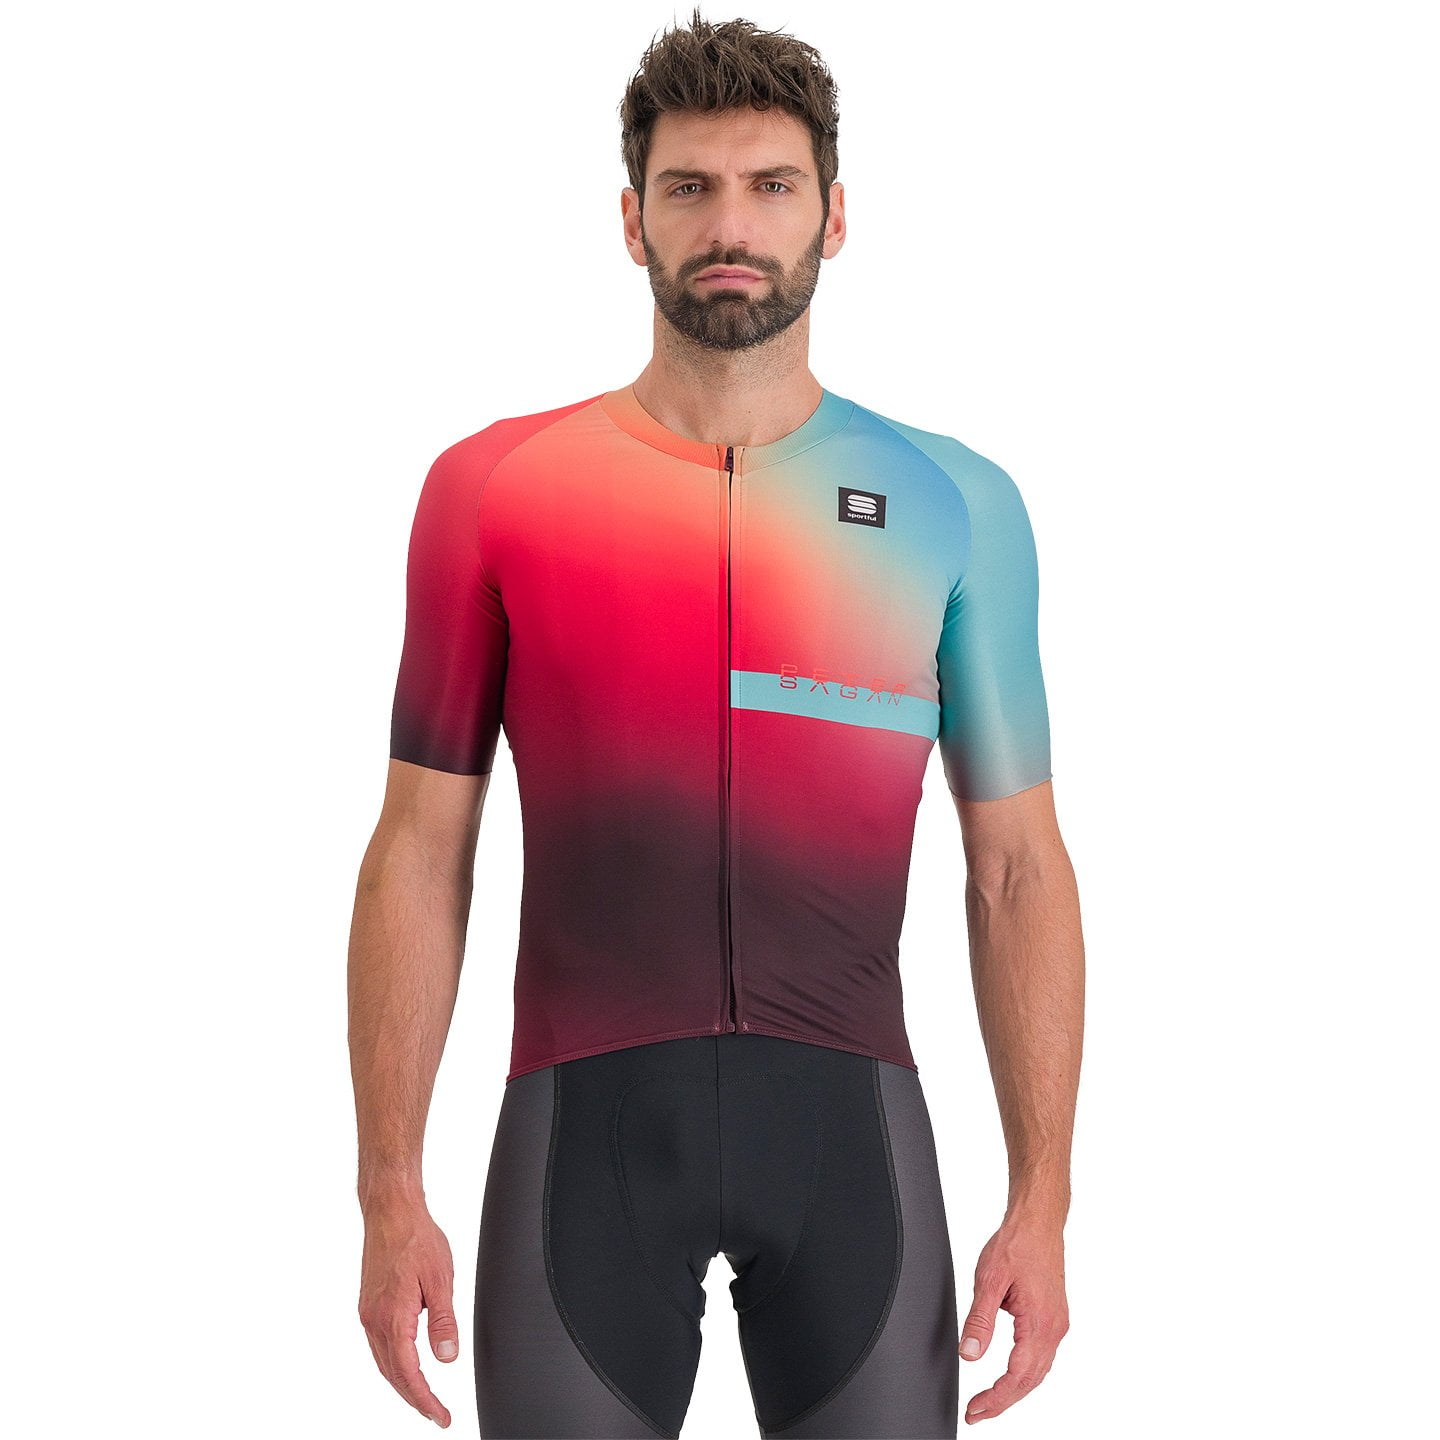 SPORTFUL Bomber Peter Sagan Line Short Sleeve Jersey Short Sleeve Jersey, for men, size XL, Bike Jersey, Cycle gear